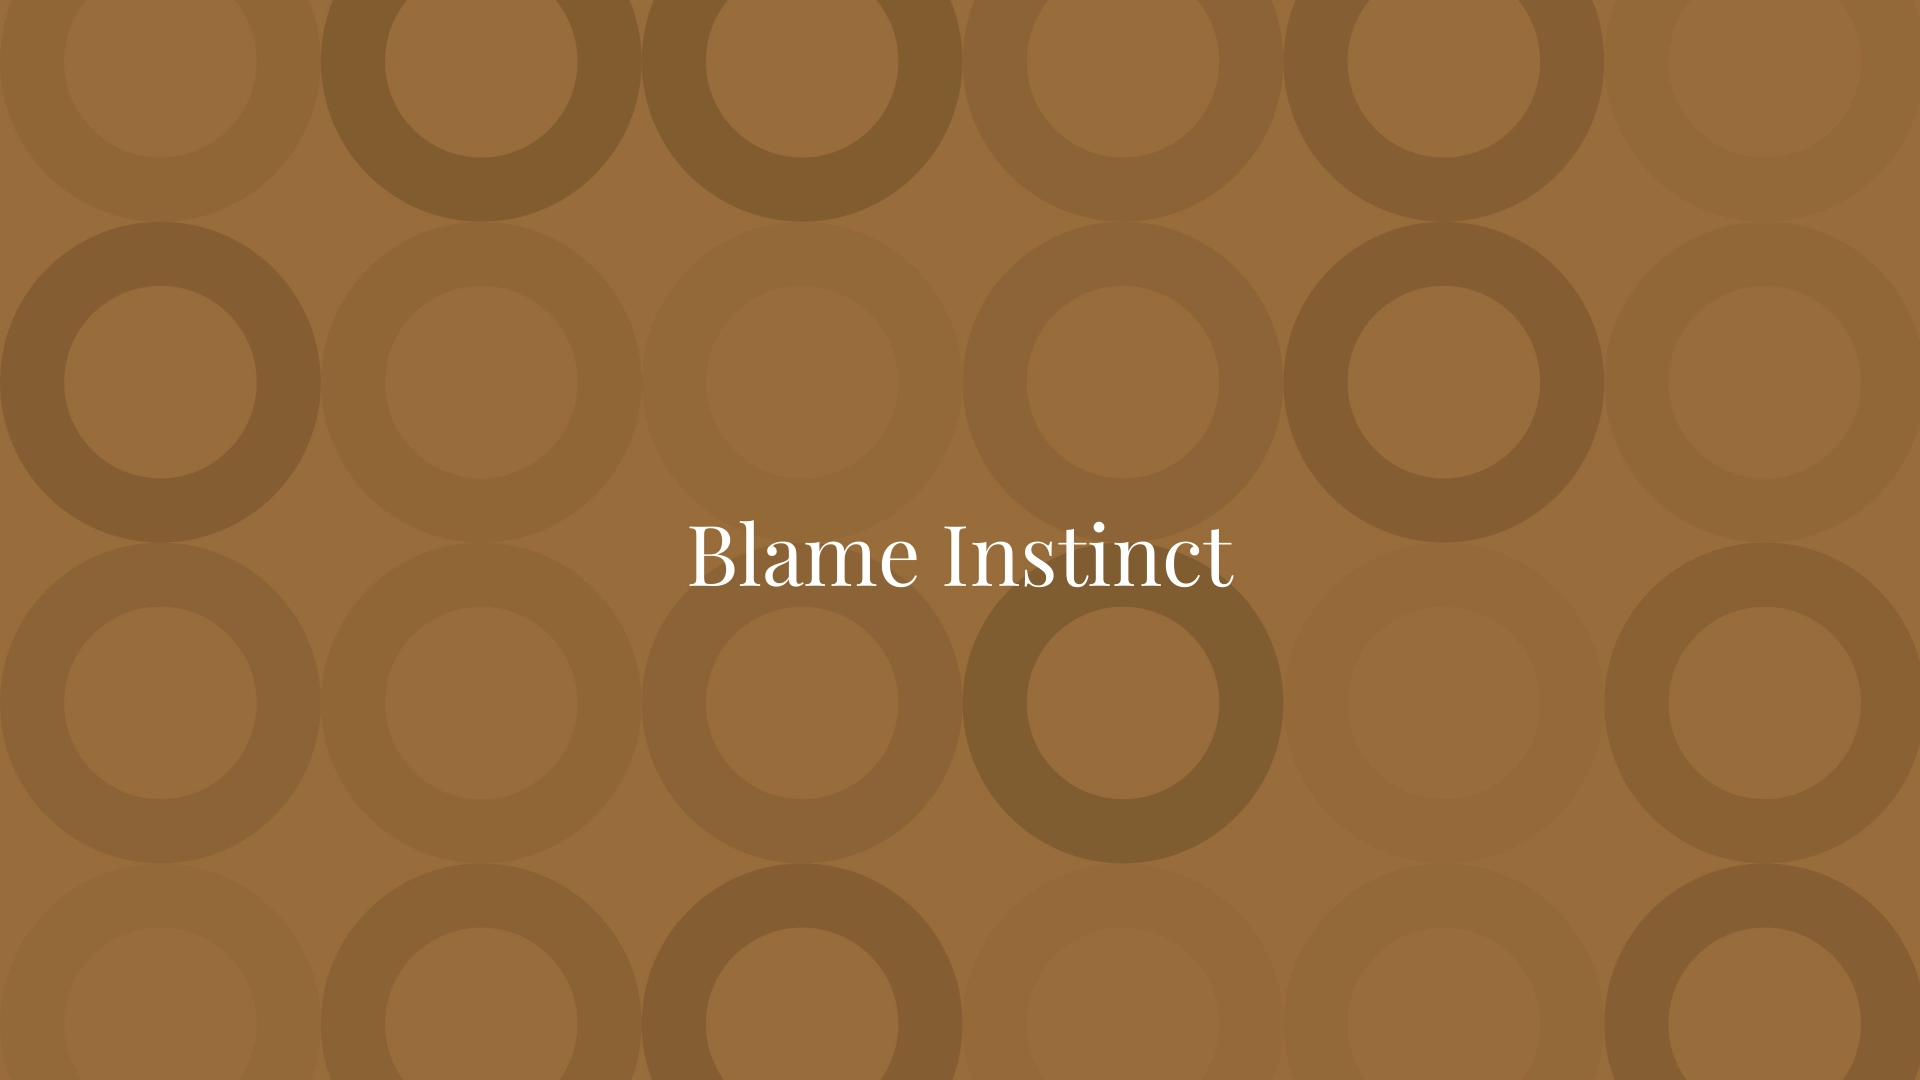 Blame Instinct